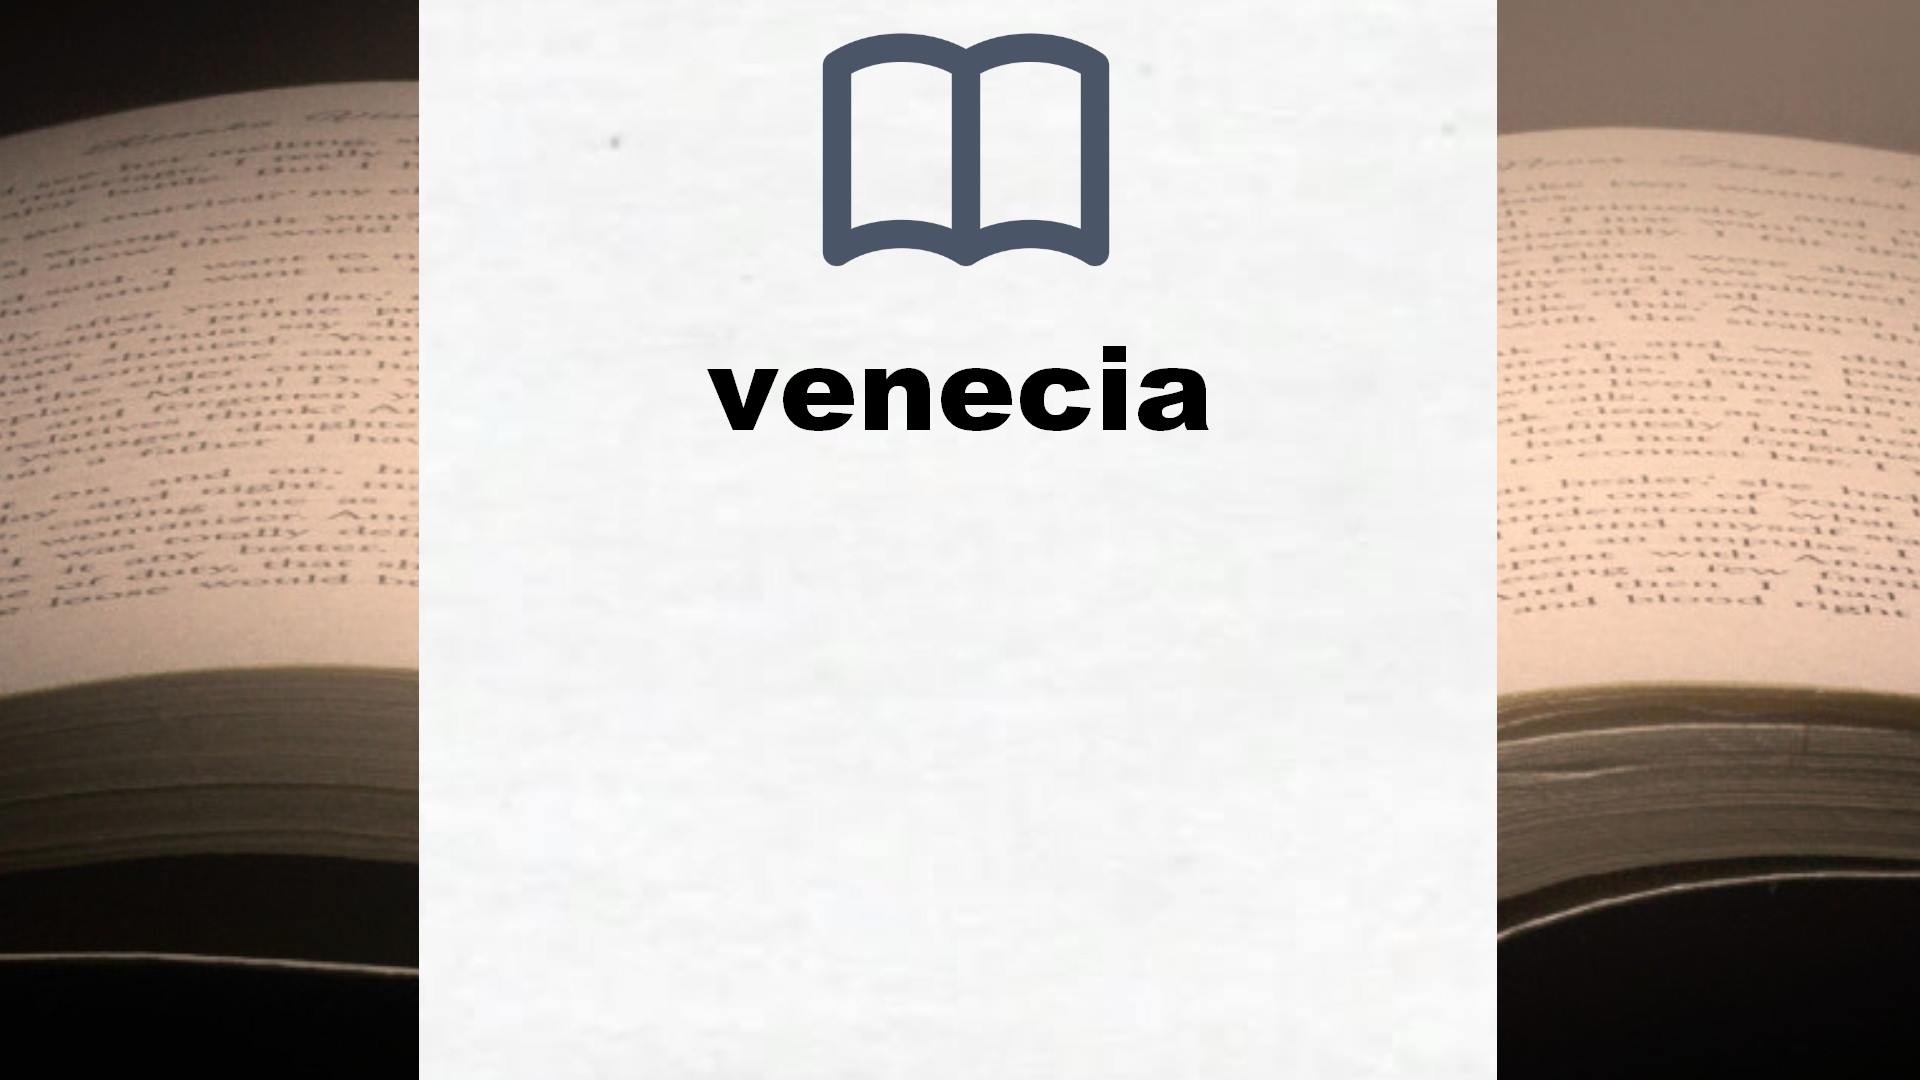 Libros sobre venecia